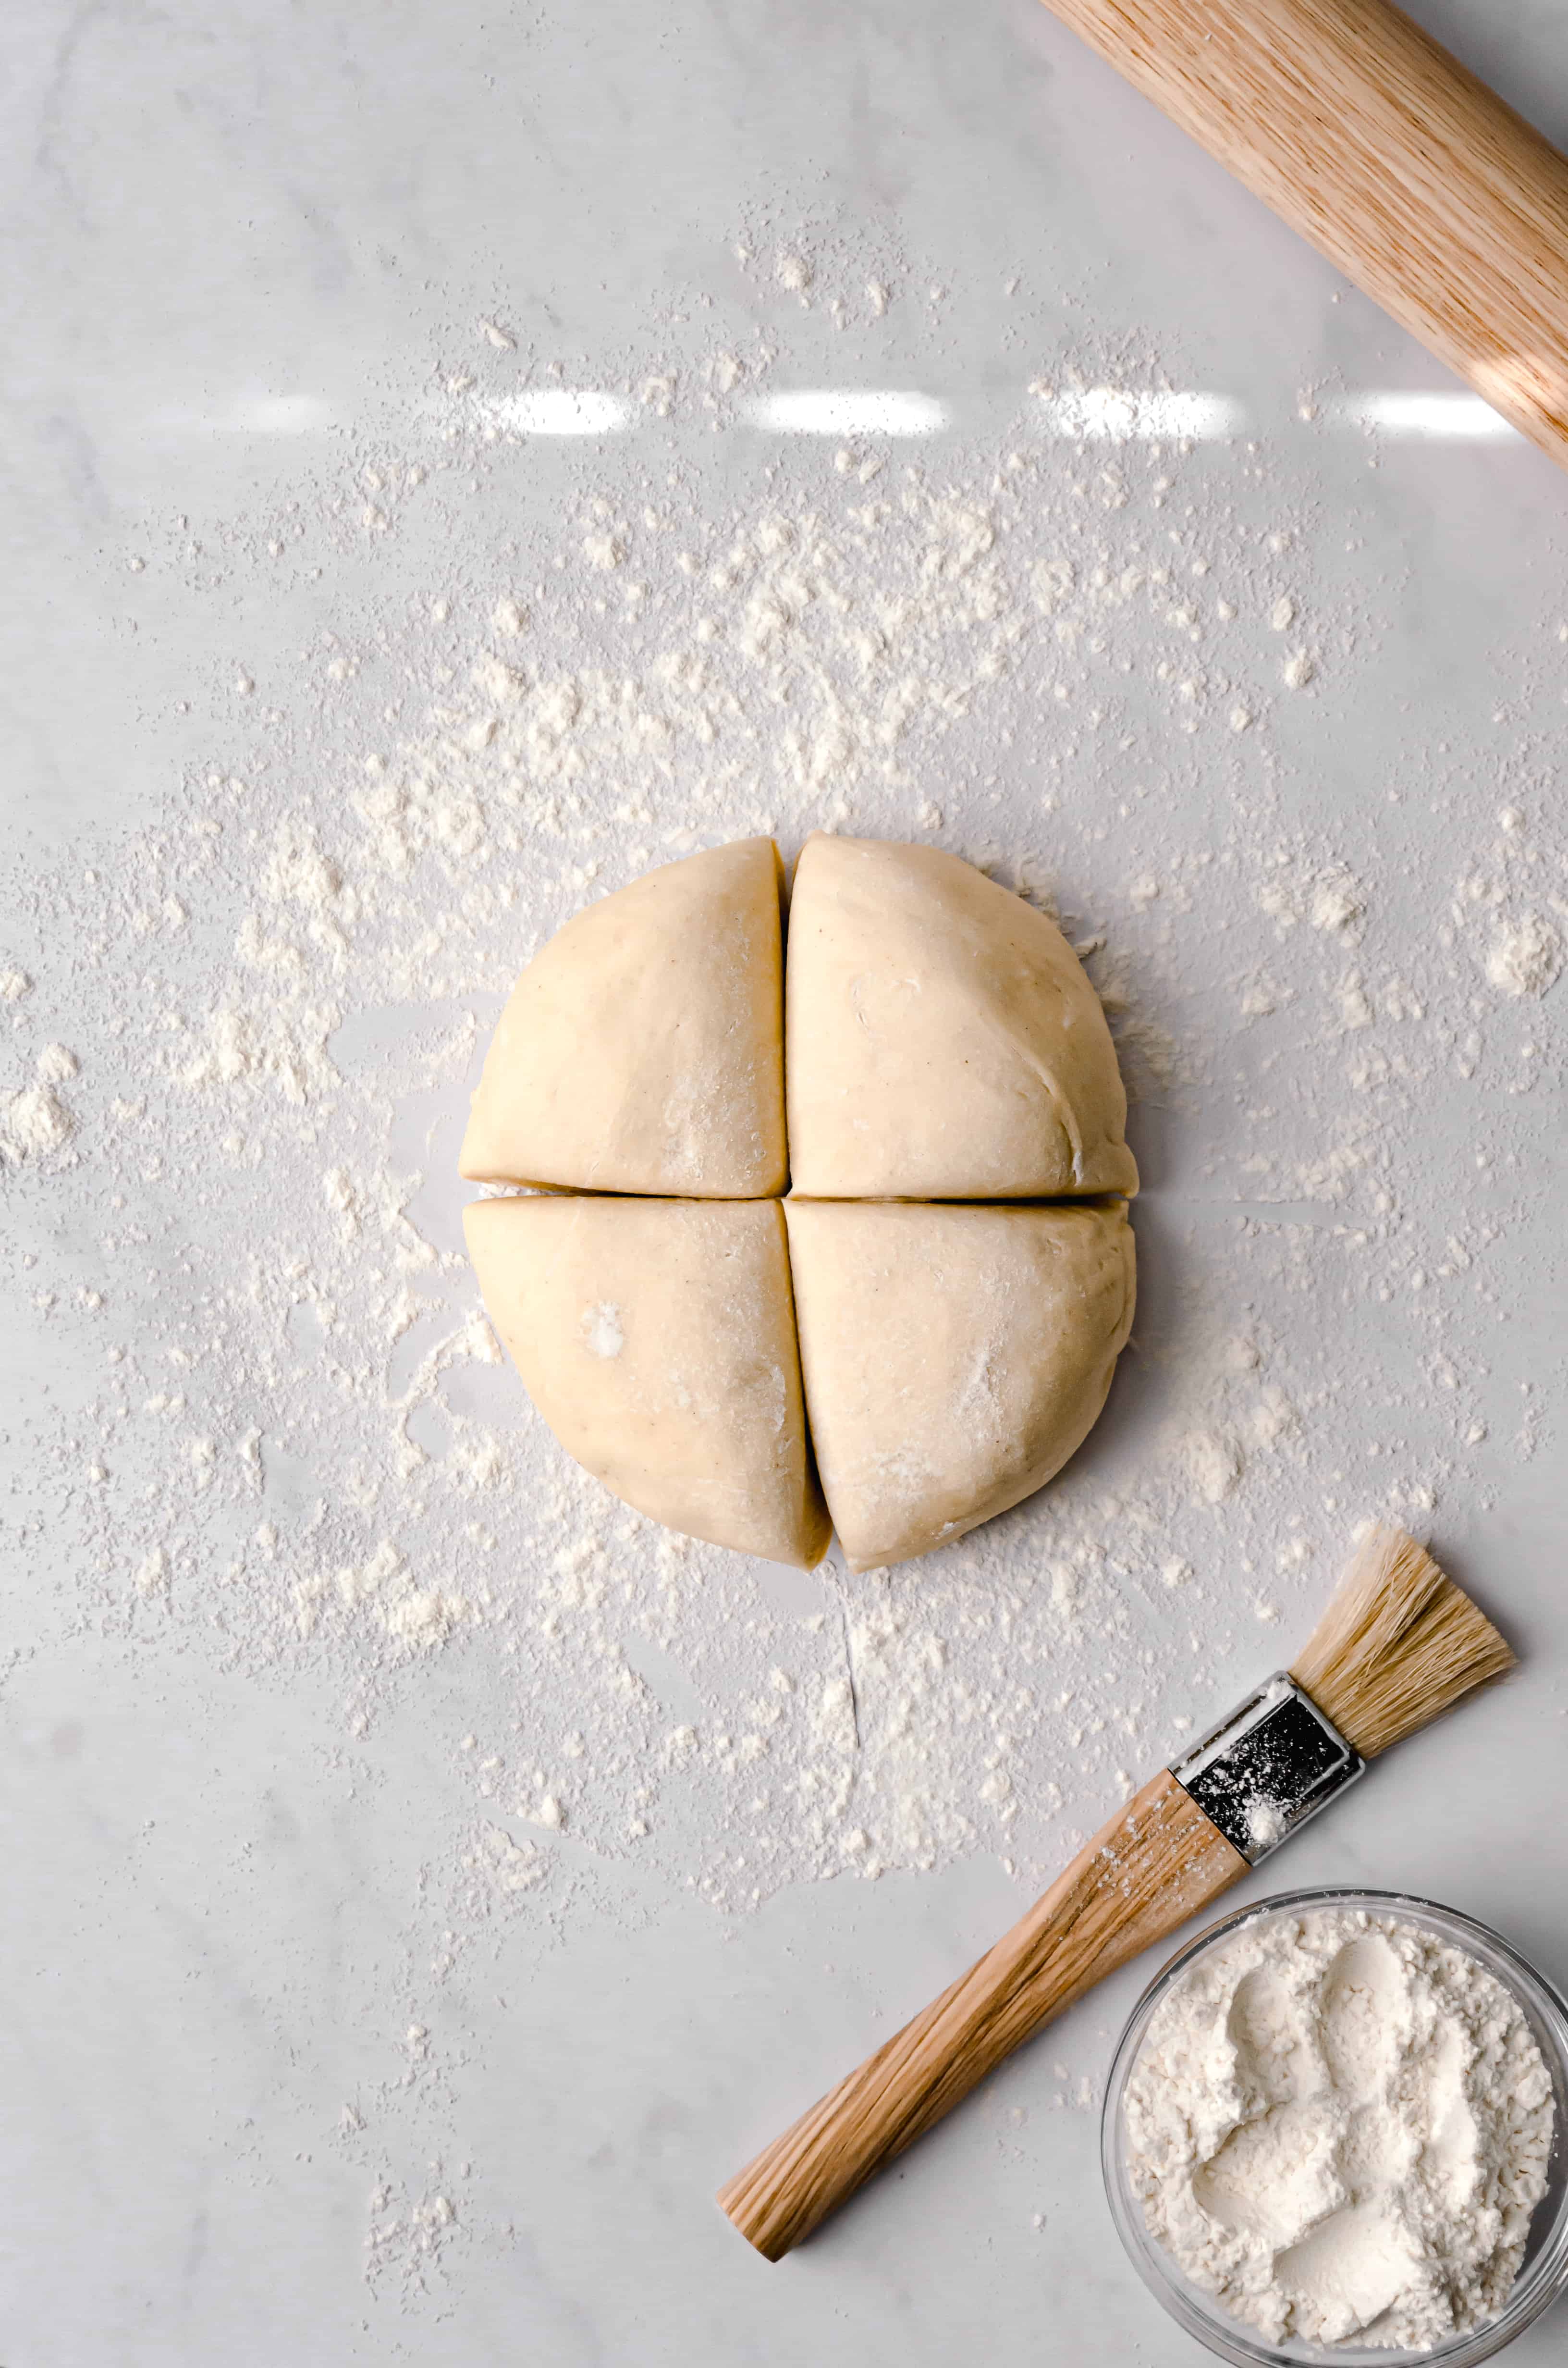 brioche dough cut into quarters on flour dusted marble surface